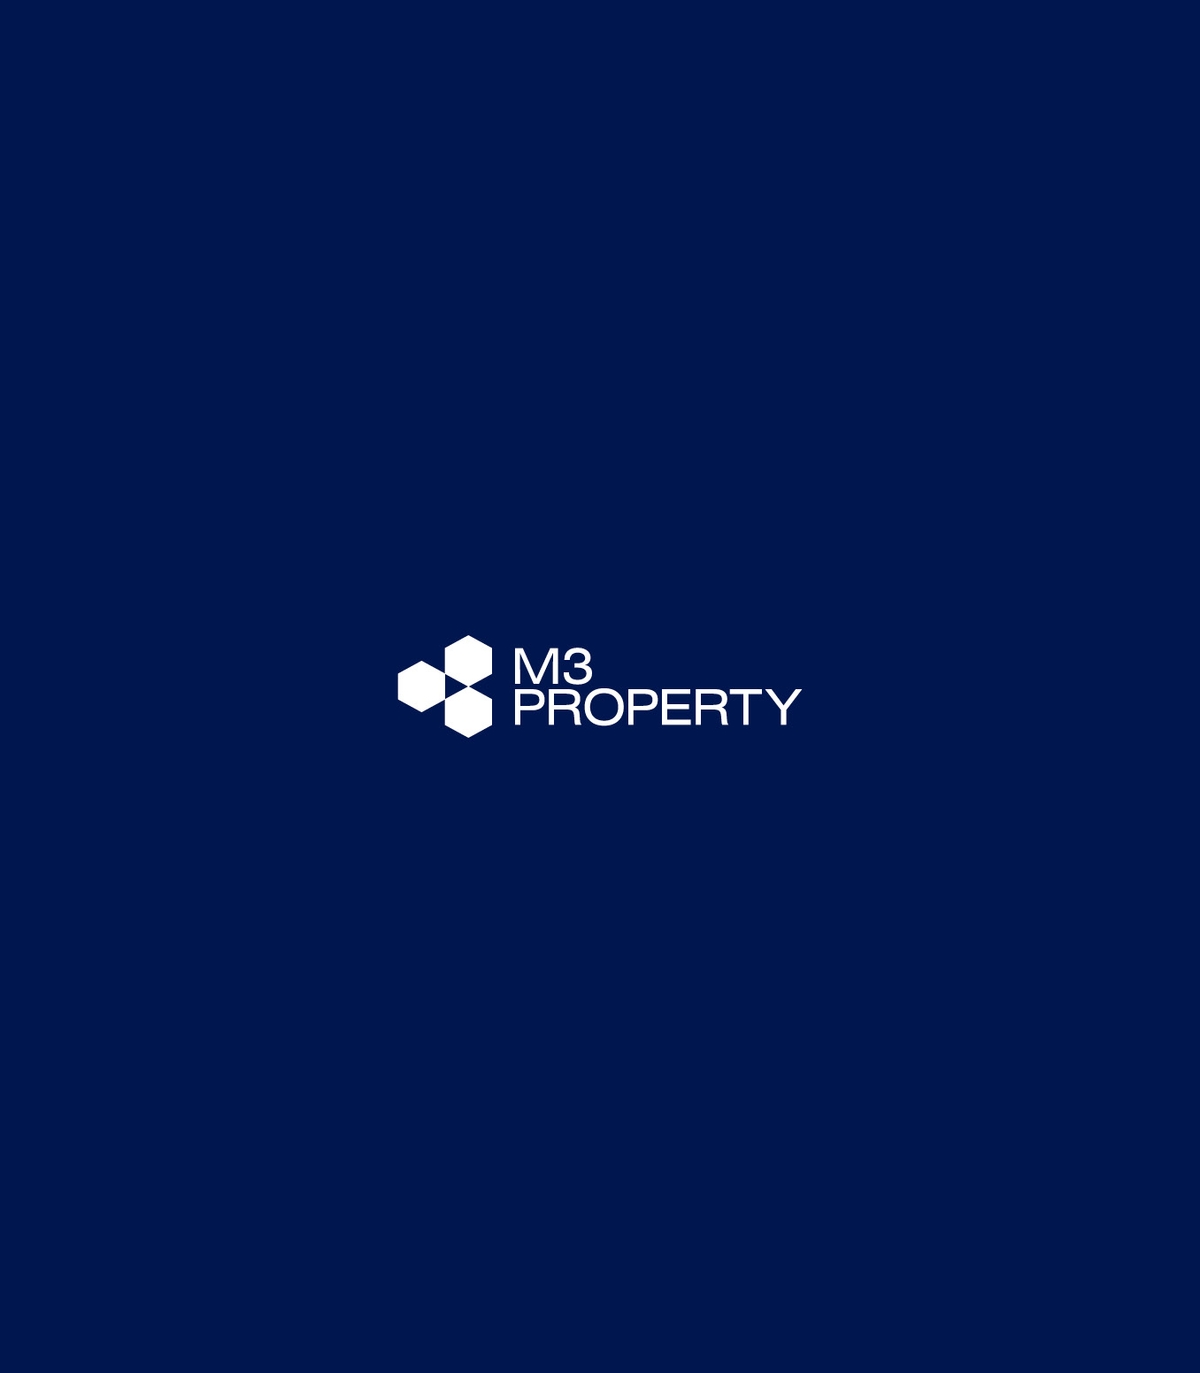 M3 Property - Brand and Website - Logo Brandmark | Atollon - a design company